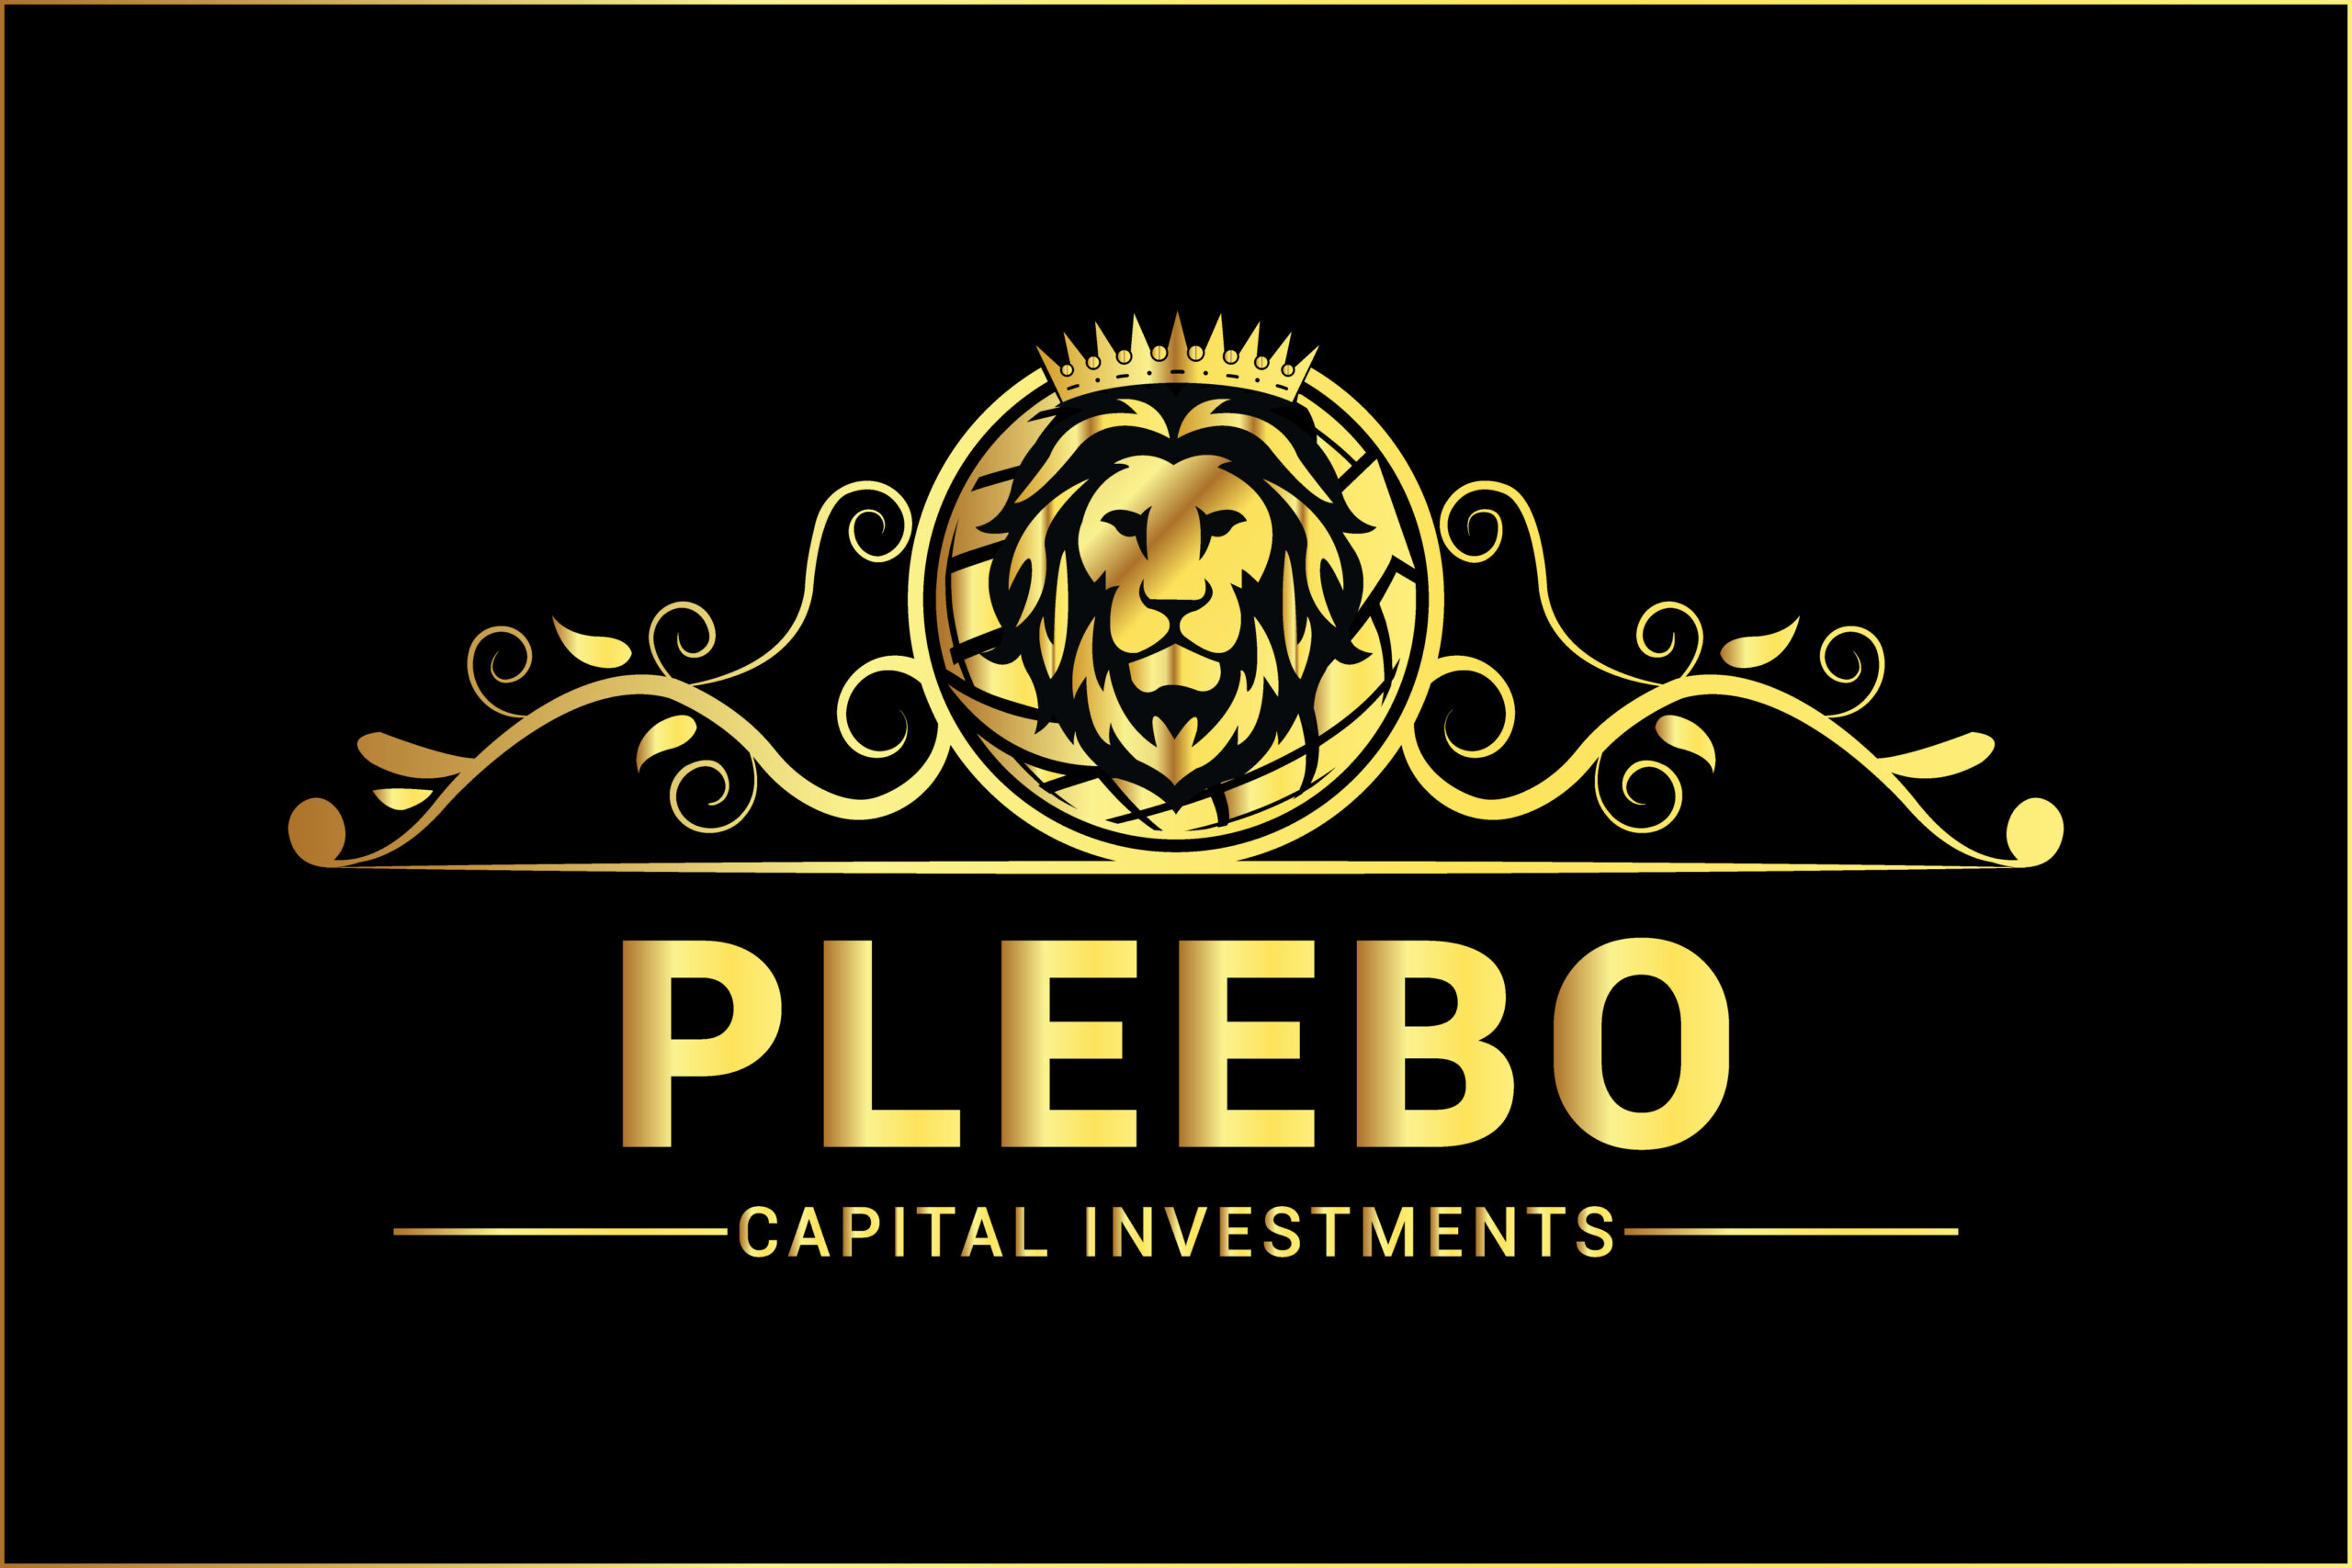 Pleebo Capital Investment